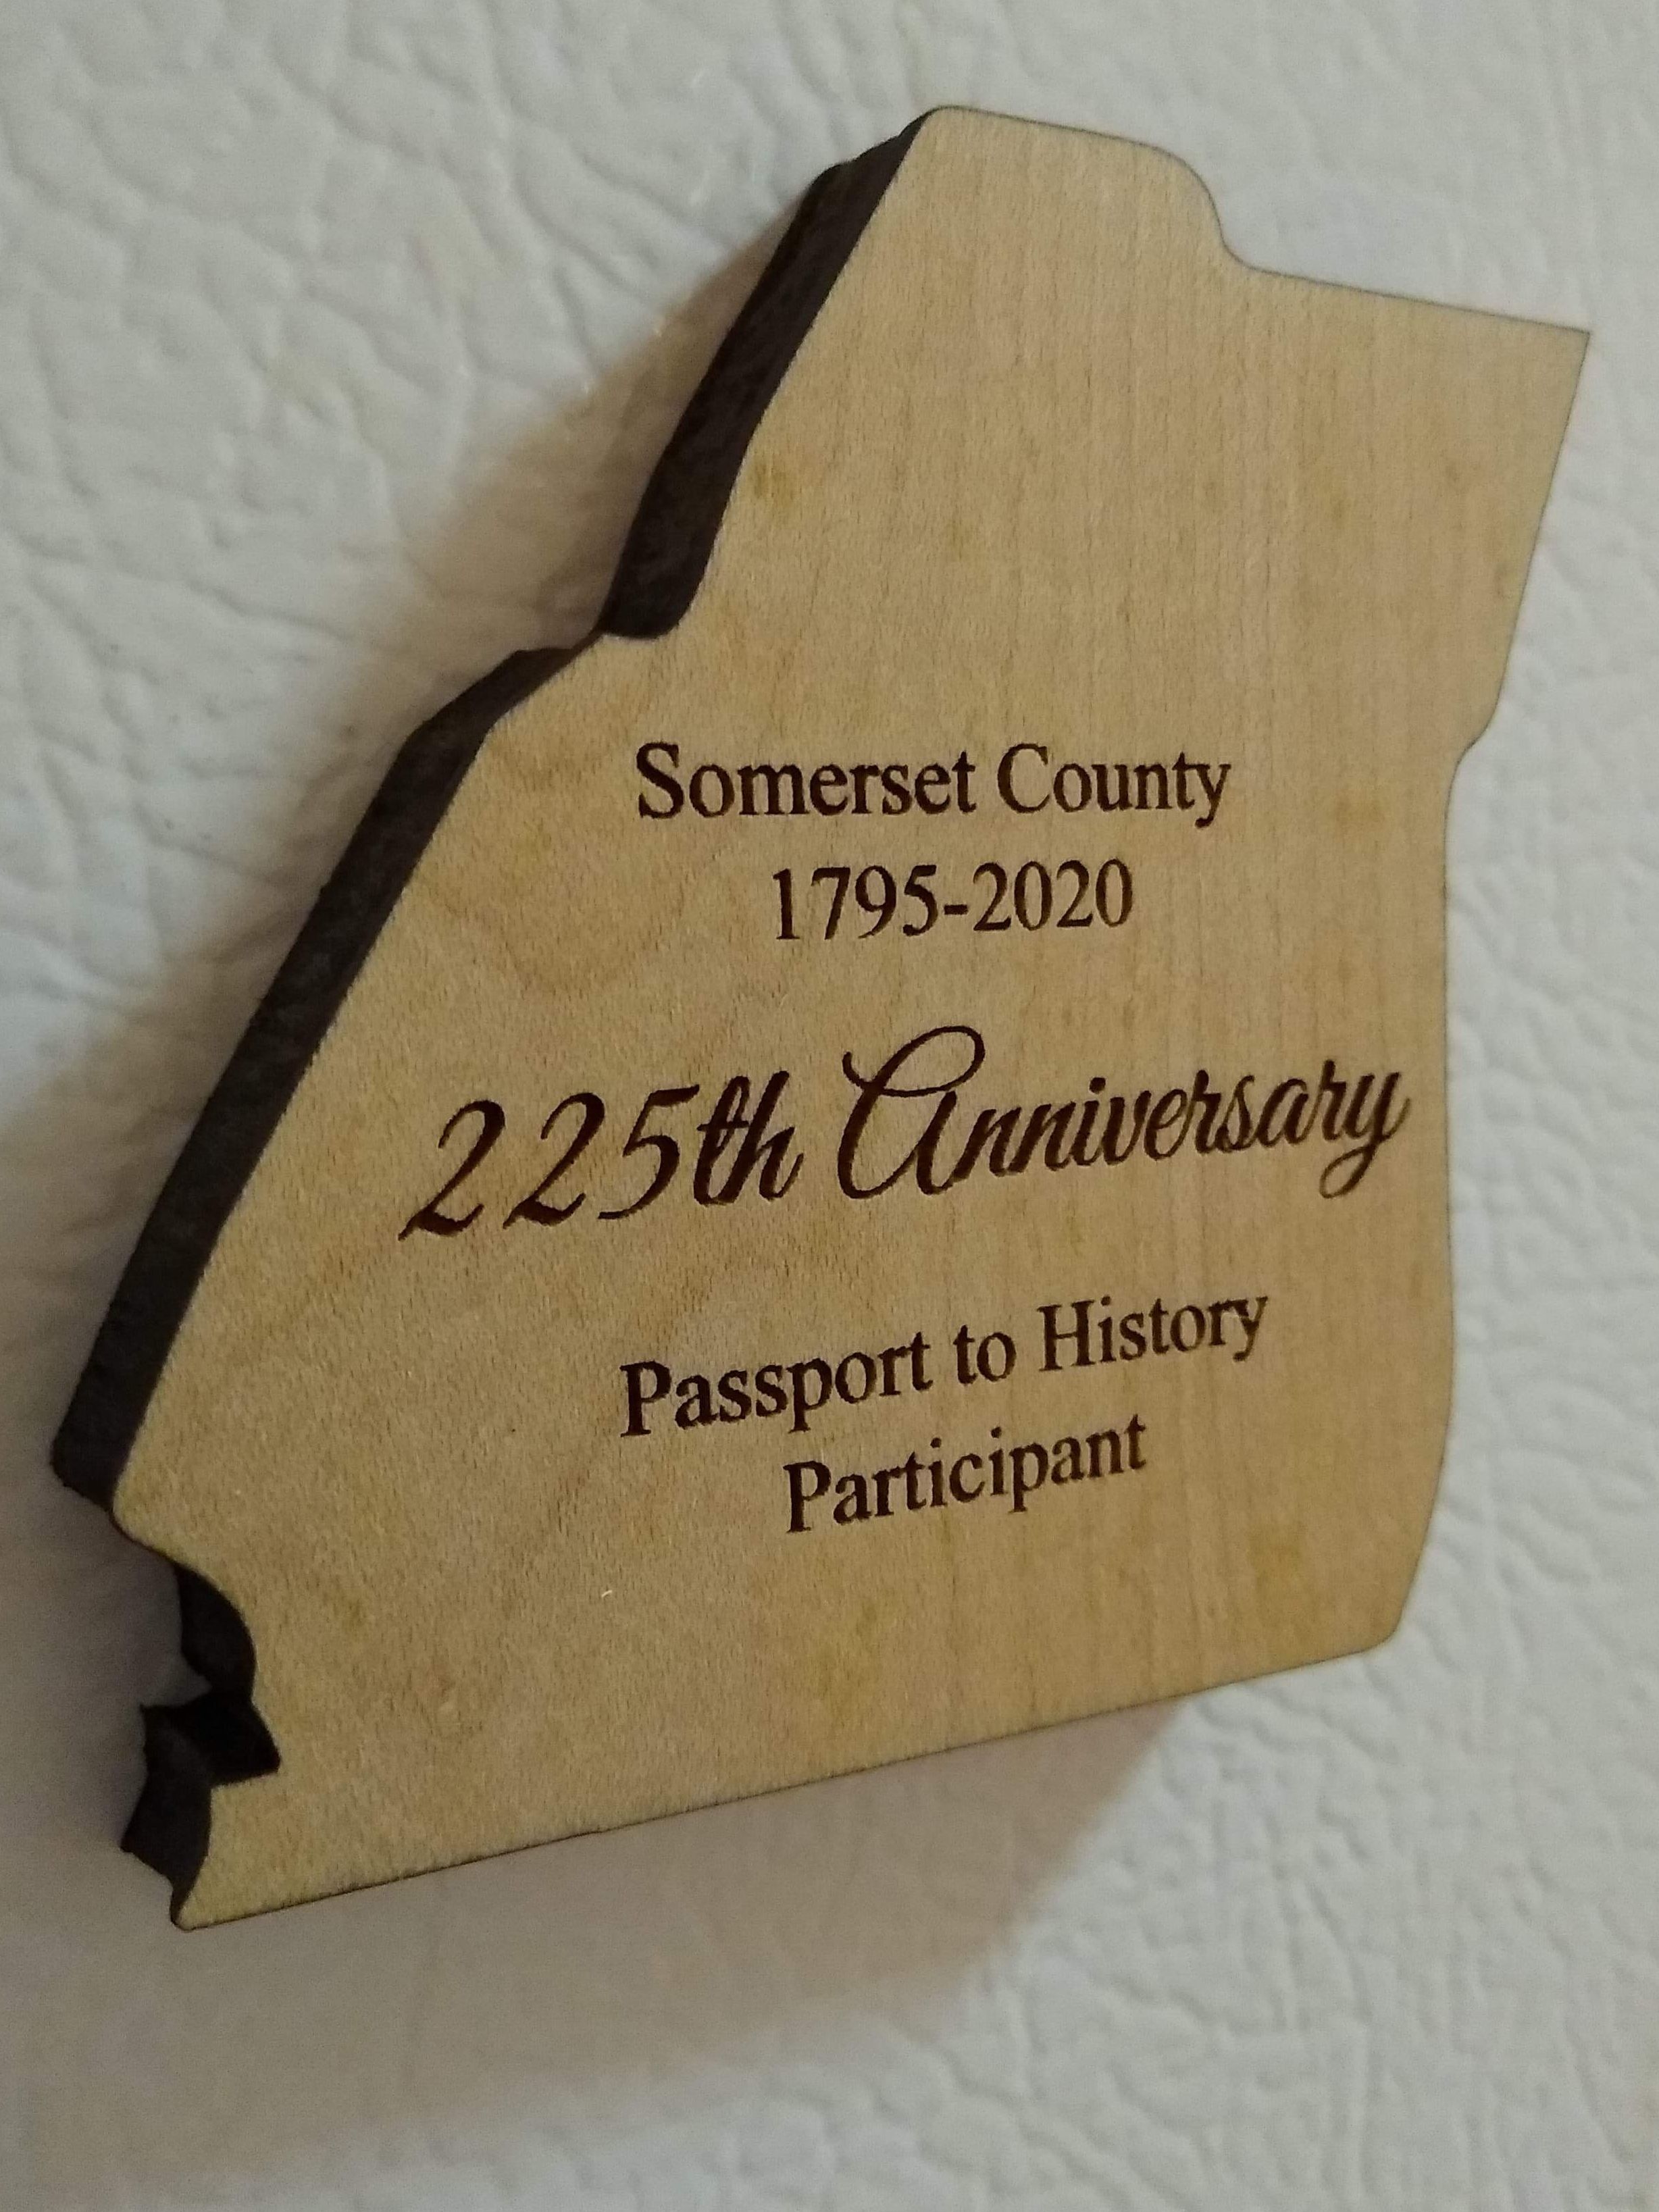 Laser cut keepsake shaped like the borders of Somerset County